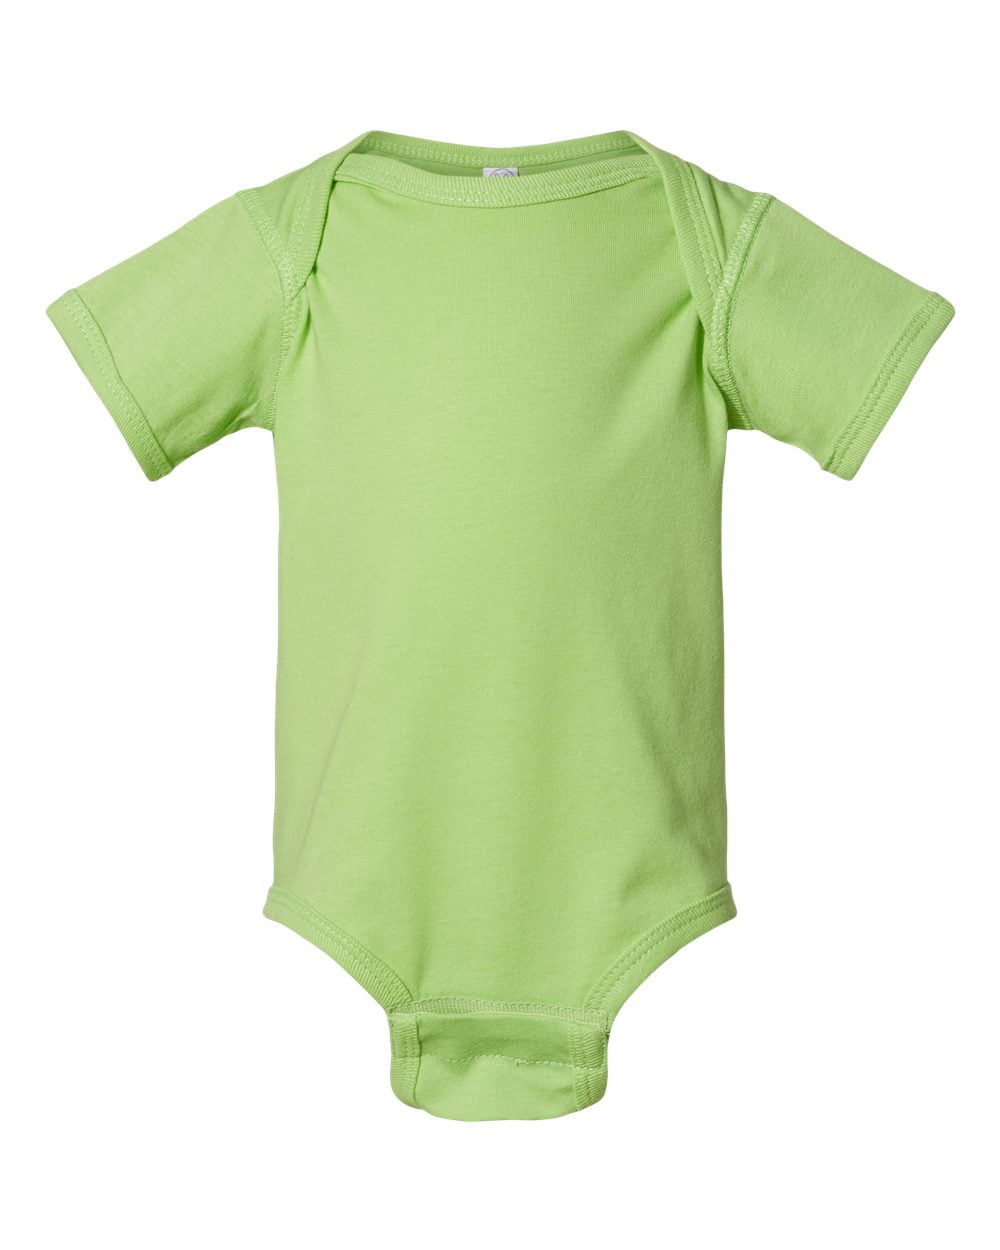 NWT Realtree APG or Hardwoods Green HD Infant/Toddler Short & Tank Topset 